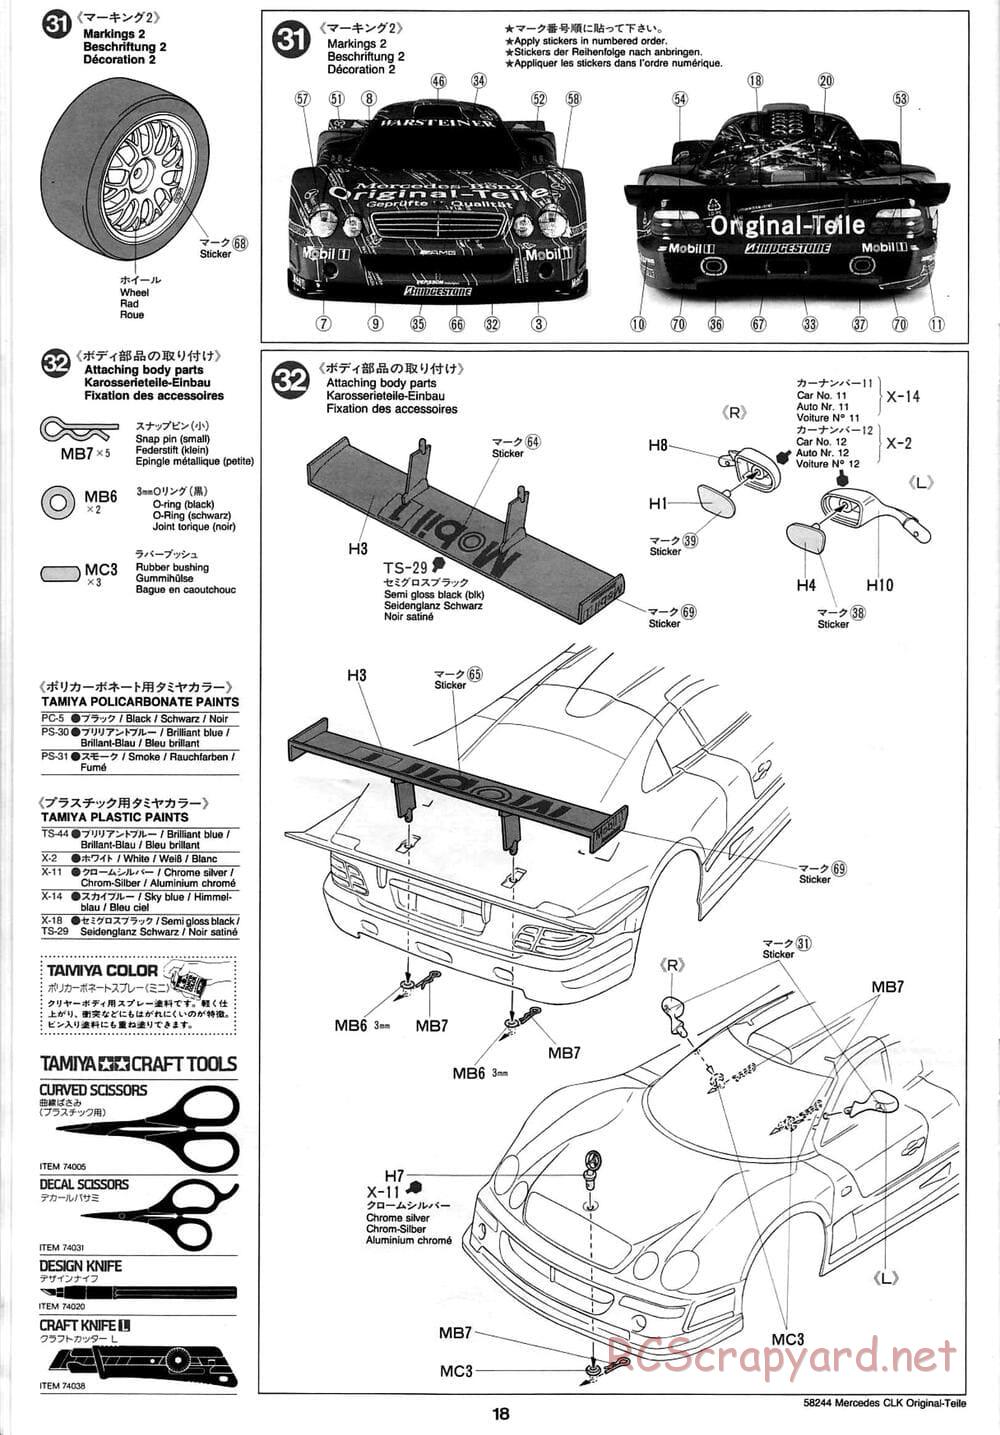 Tamiya - Mercedes CLK-GTR Original-Teile - TL-01 Chassis - Manual - Page 18